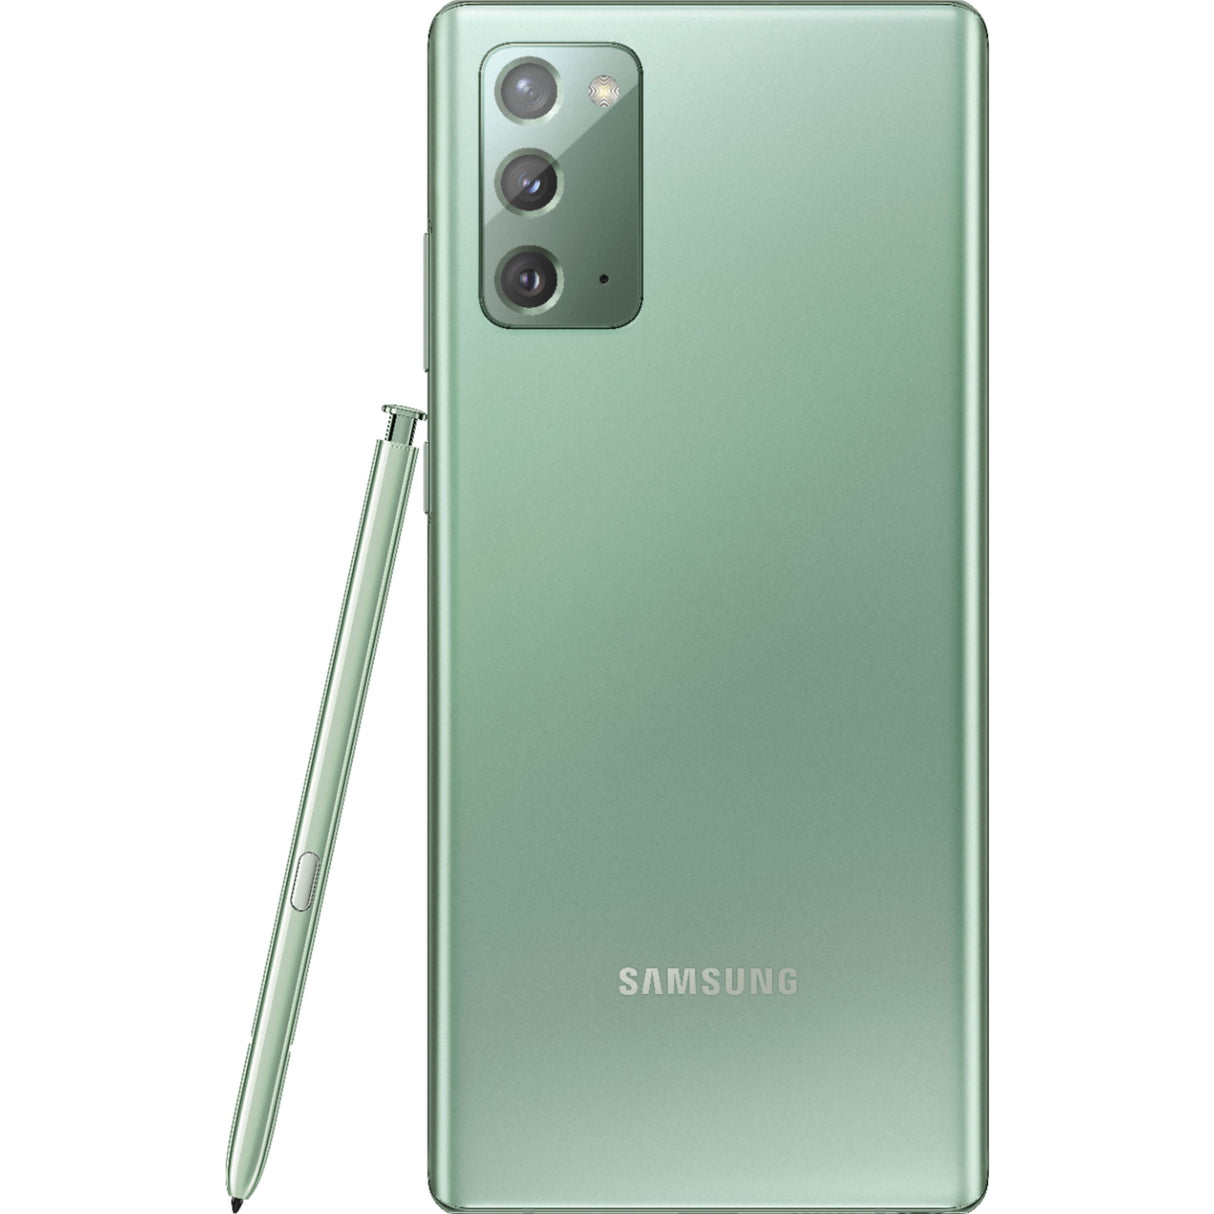 Samsung Galaxy Note20 5G - 128 GB - Mystic Green - Verizon